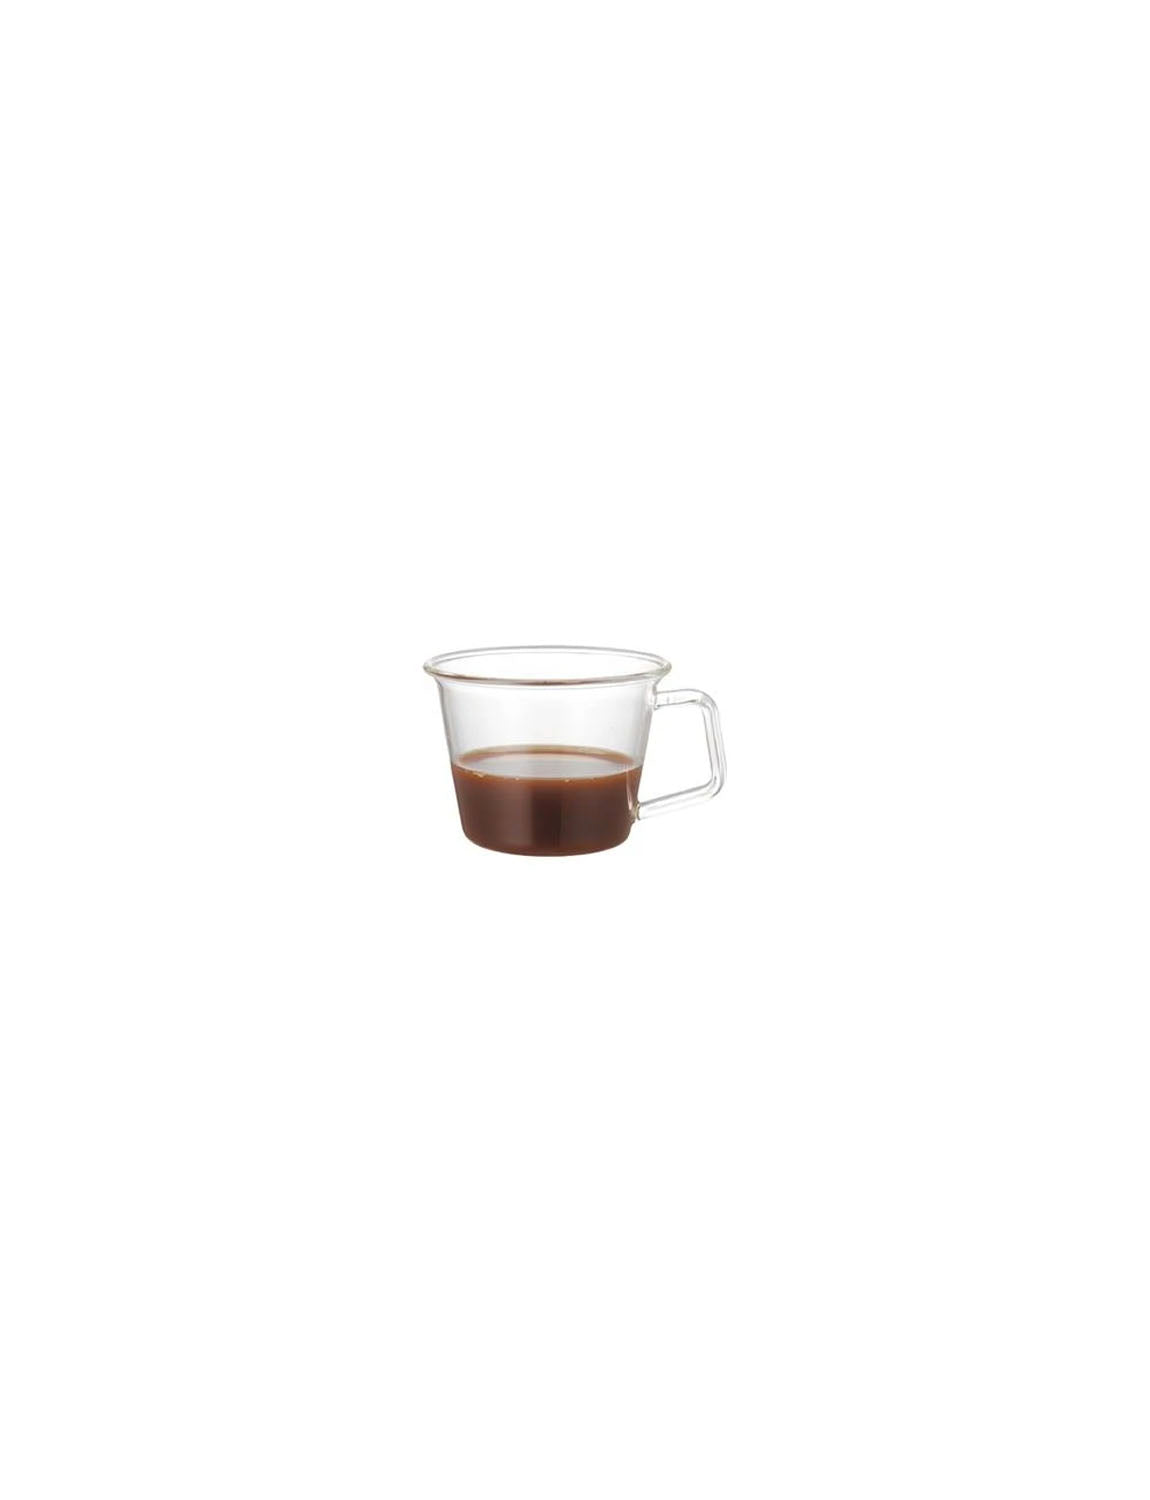 Kinto Cast Espresso Cup 90ml / 3oz